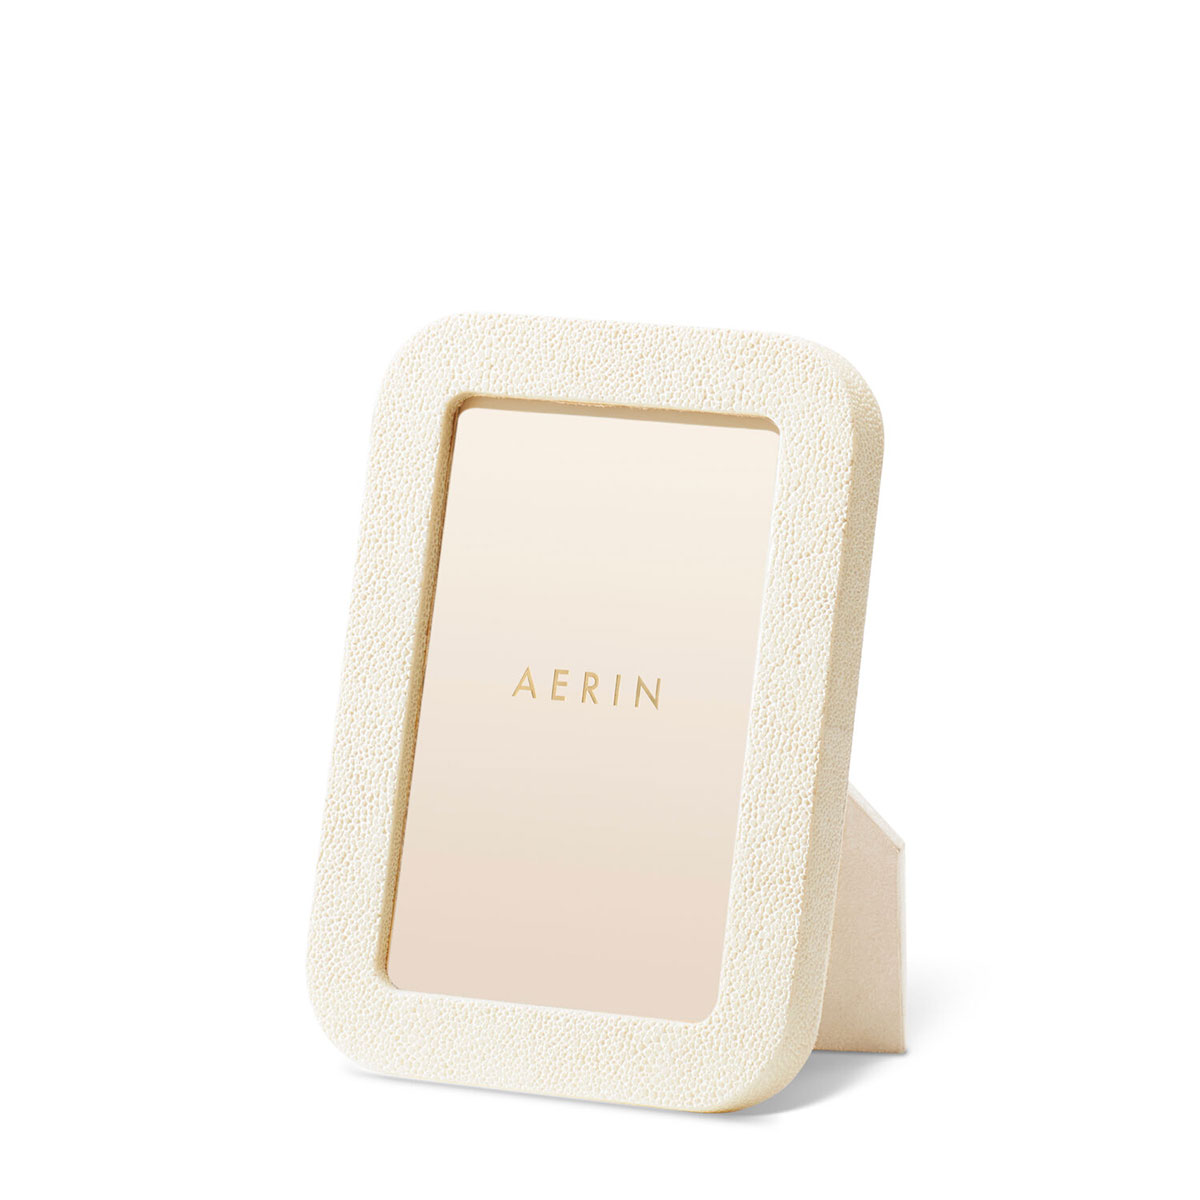 Aerin Modern Shagreen Frame, Cream - 5x7